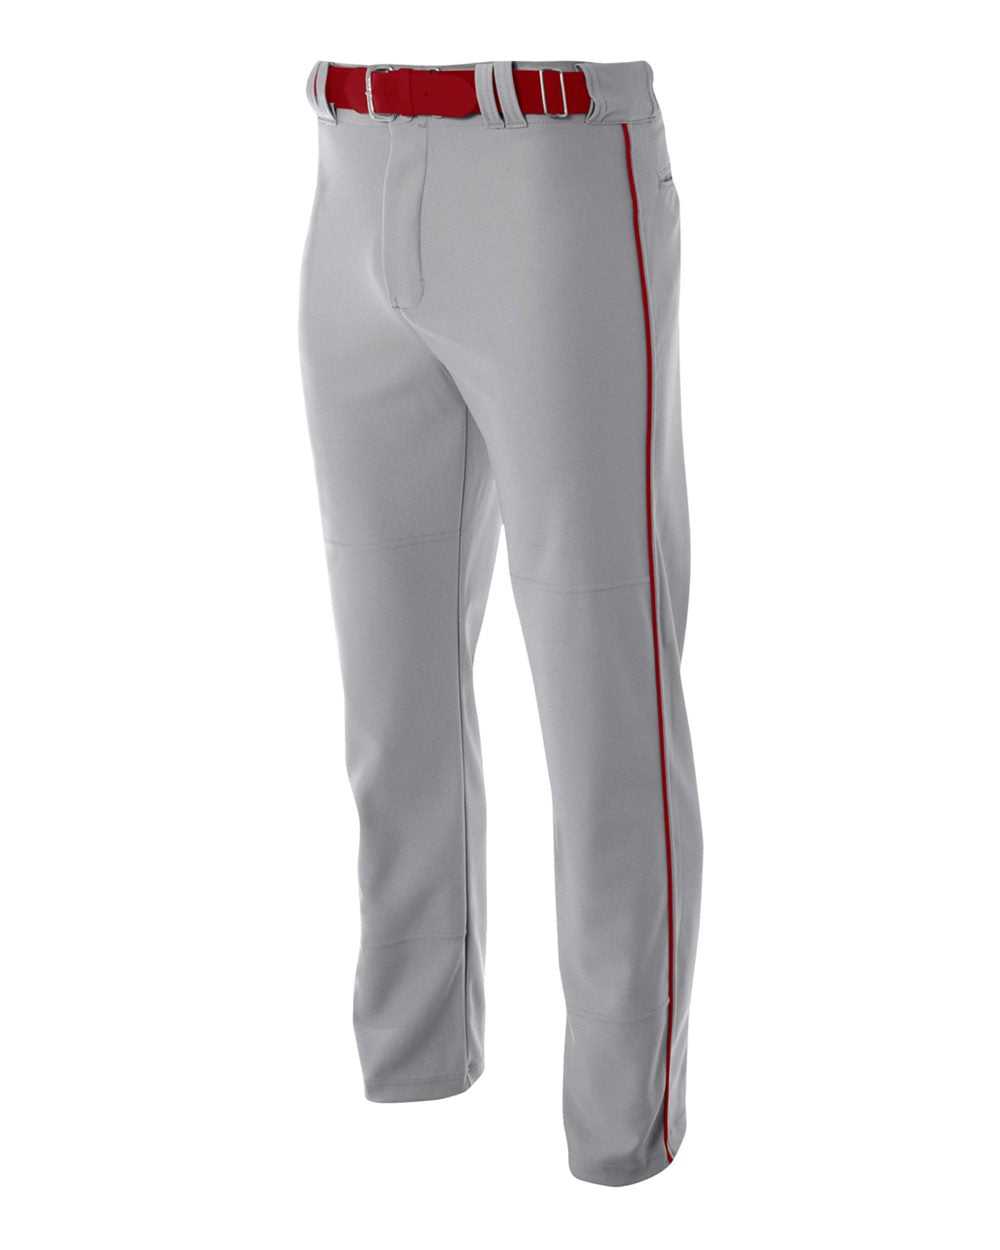 A4 N6162 Pro Style Open Bottom Baggy Cut Baseball Pant - Gray Cardinal - HIT a Double